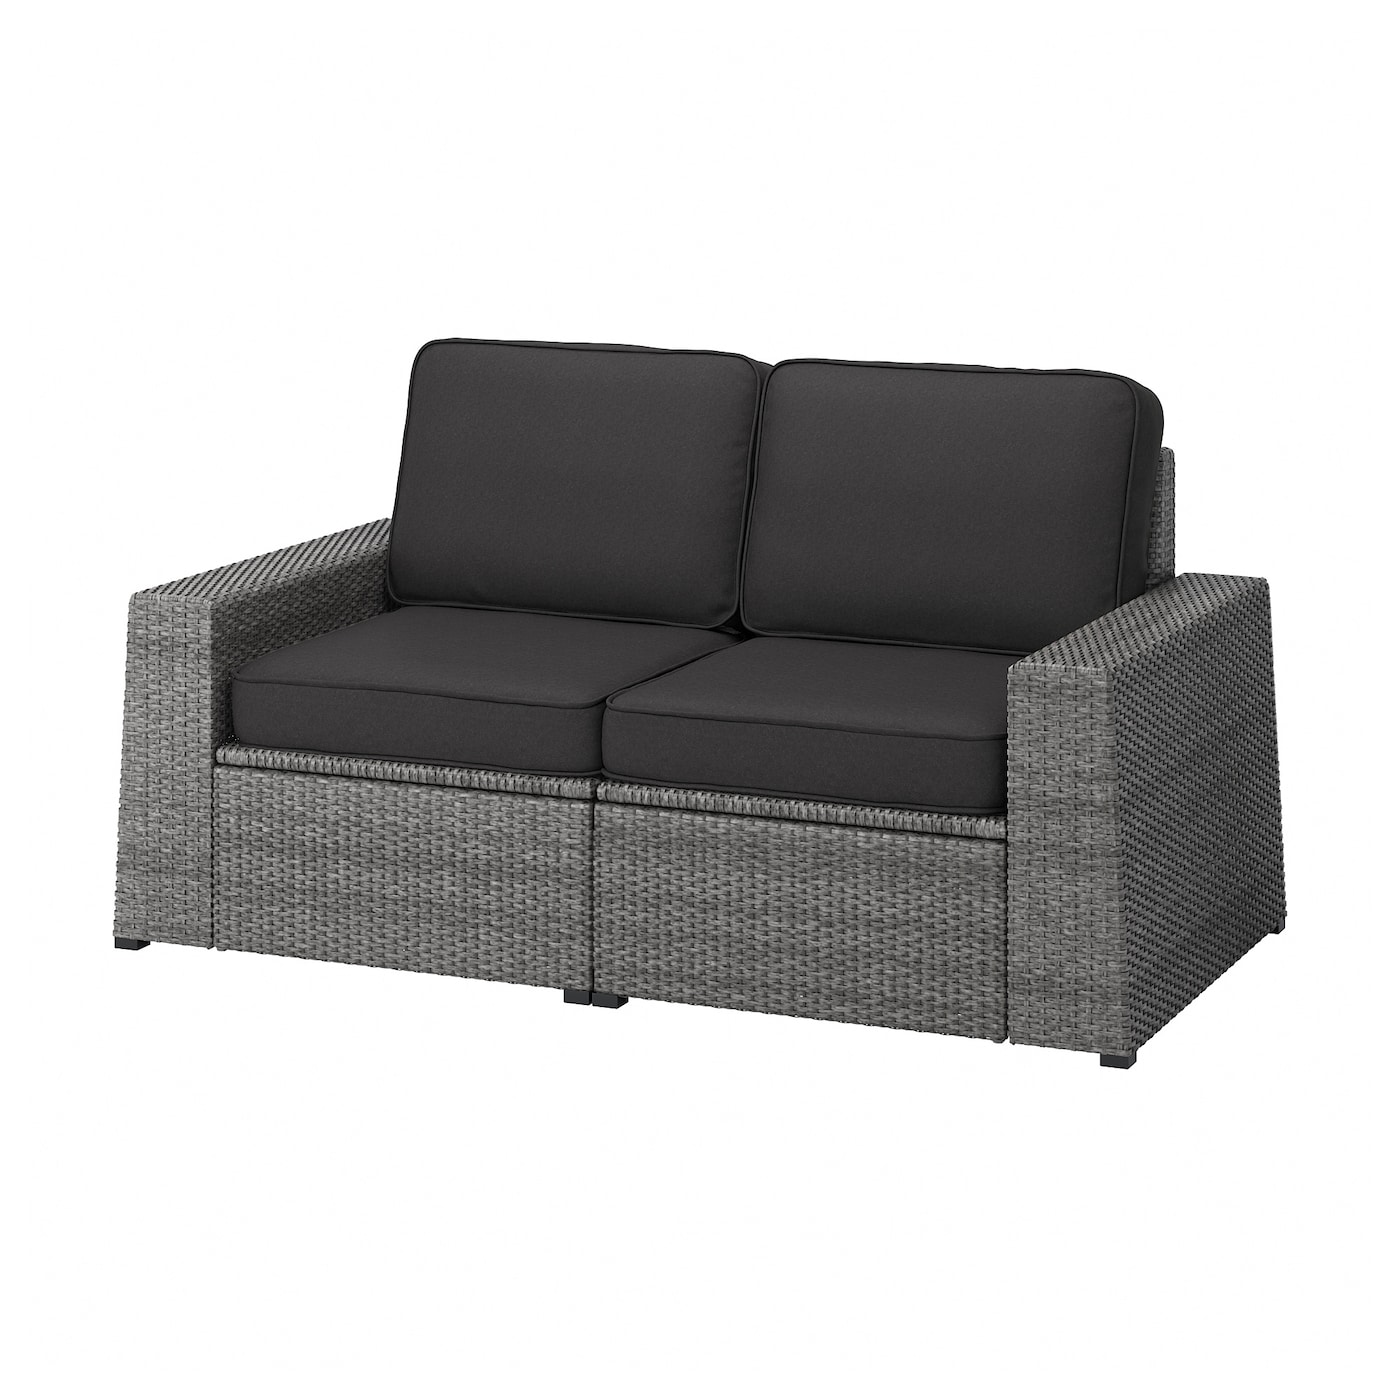 2-местный модульный диван - IKEA SOLLERÖN/SOLLERON/СОЛЛЕРОН ИКЕА, 90х82х161 см, черный/серый